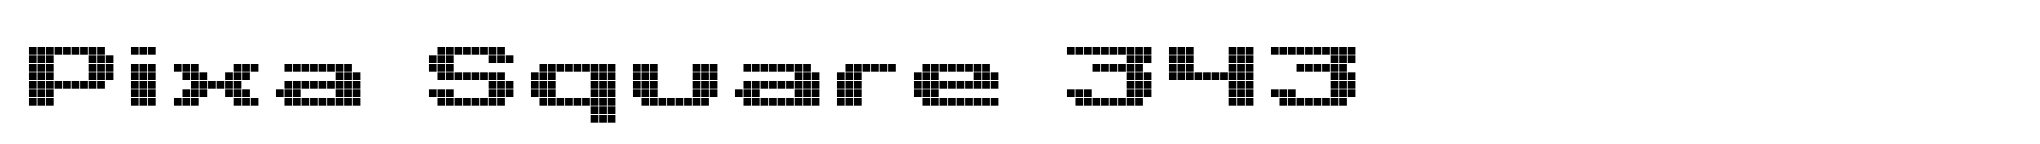 Pixa Square 343 image